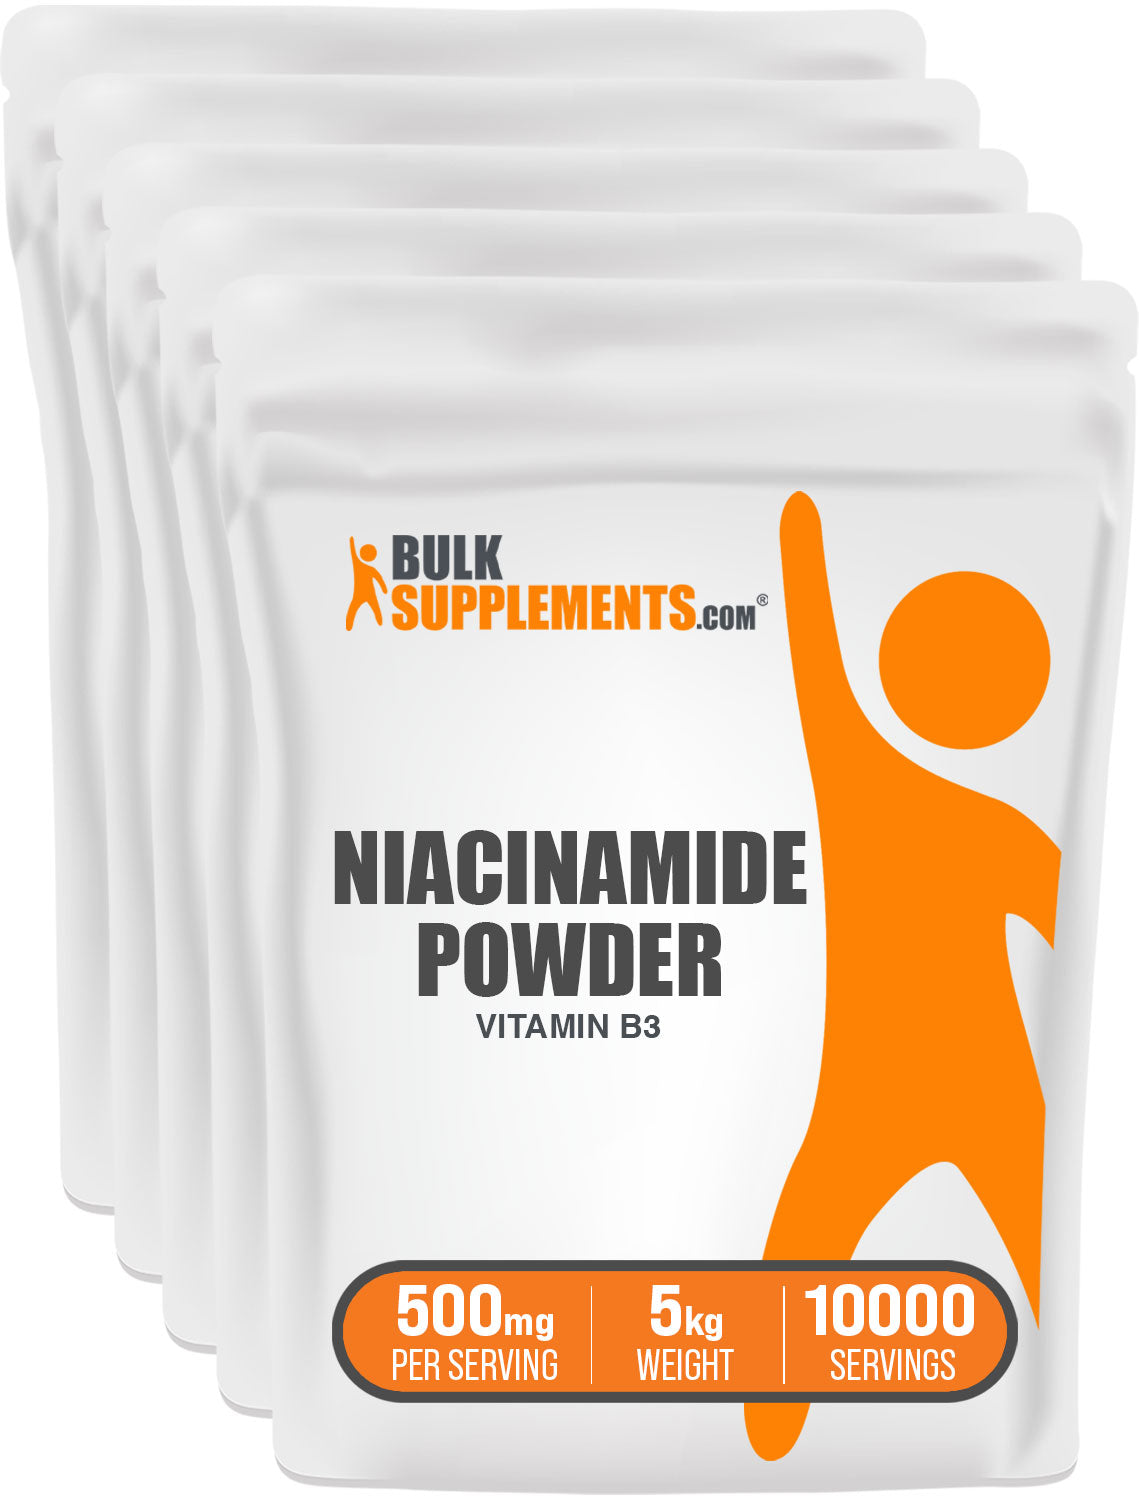 BulkSupplements Niacinamide Powder Vitamin B3 5kg bag